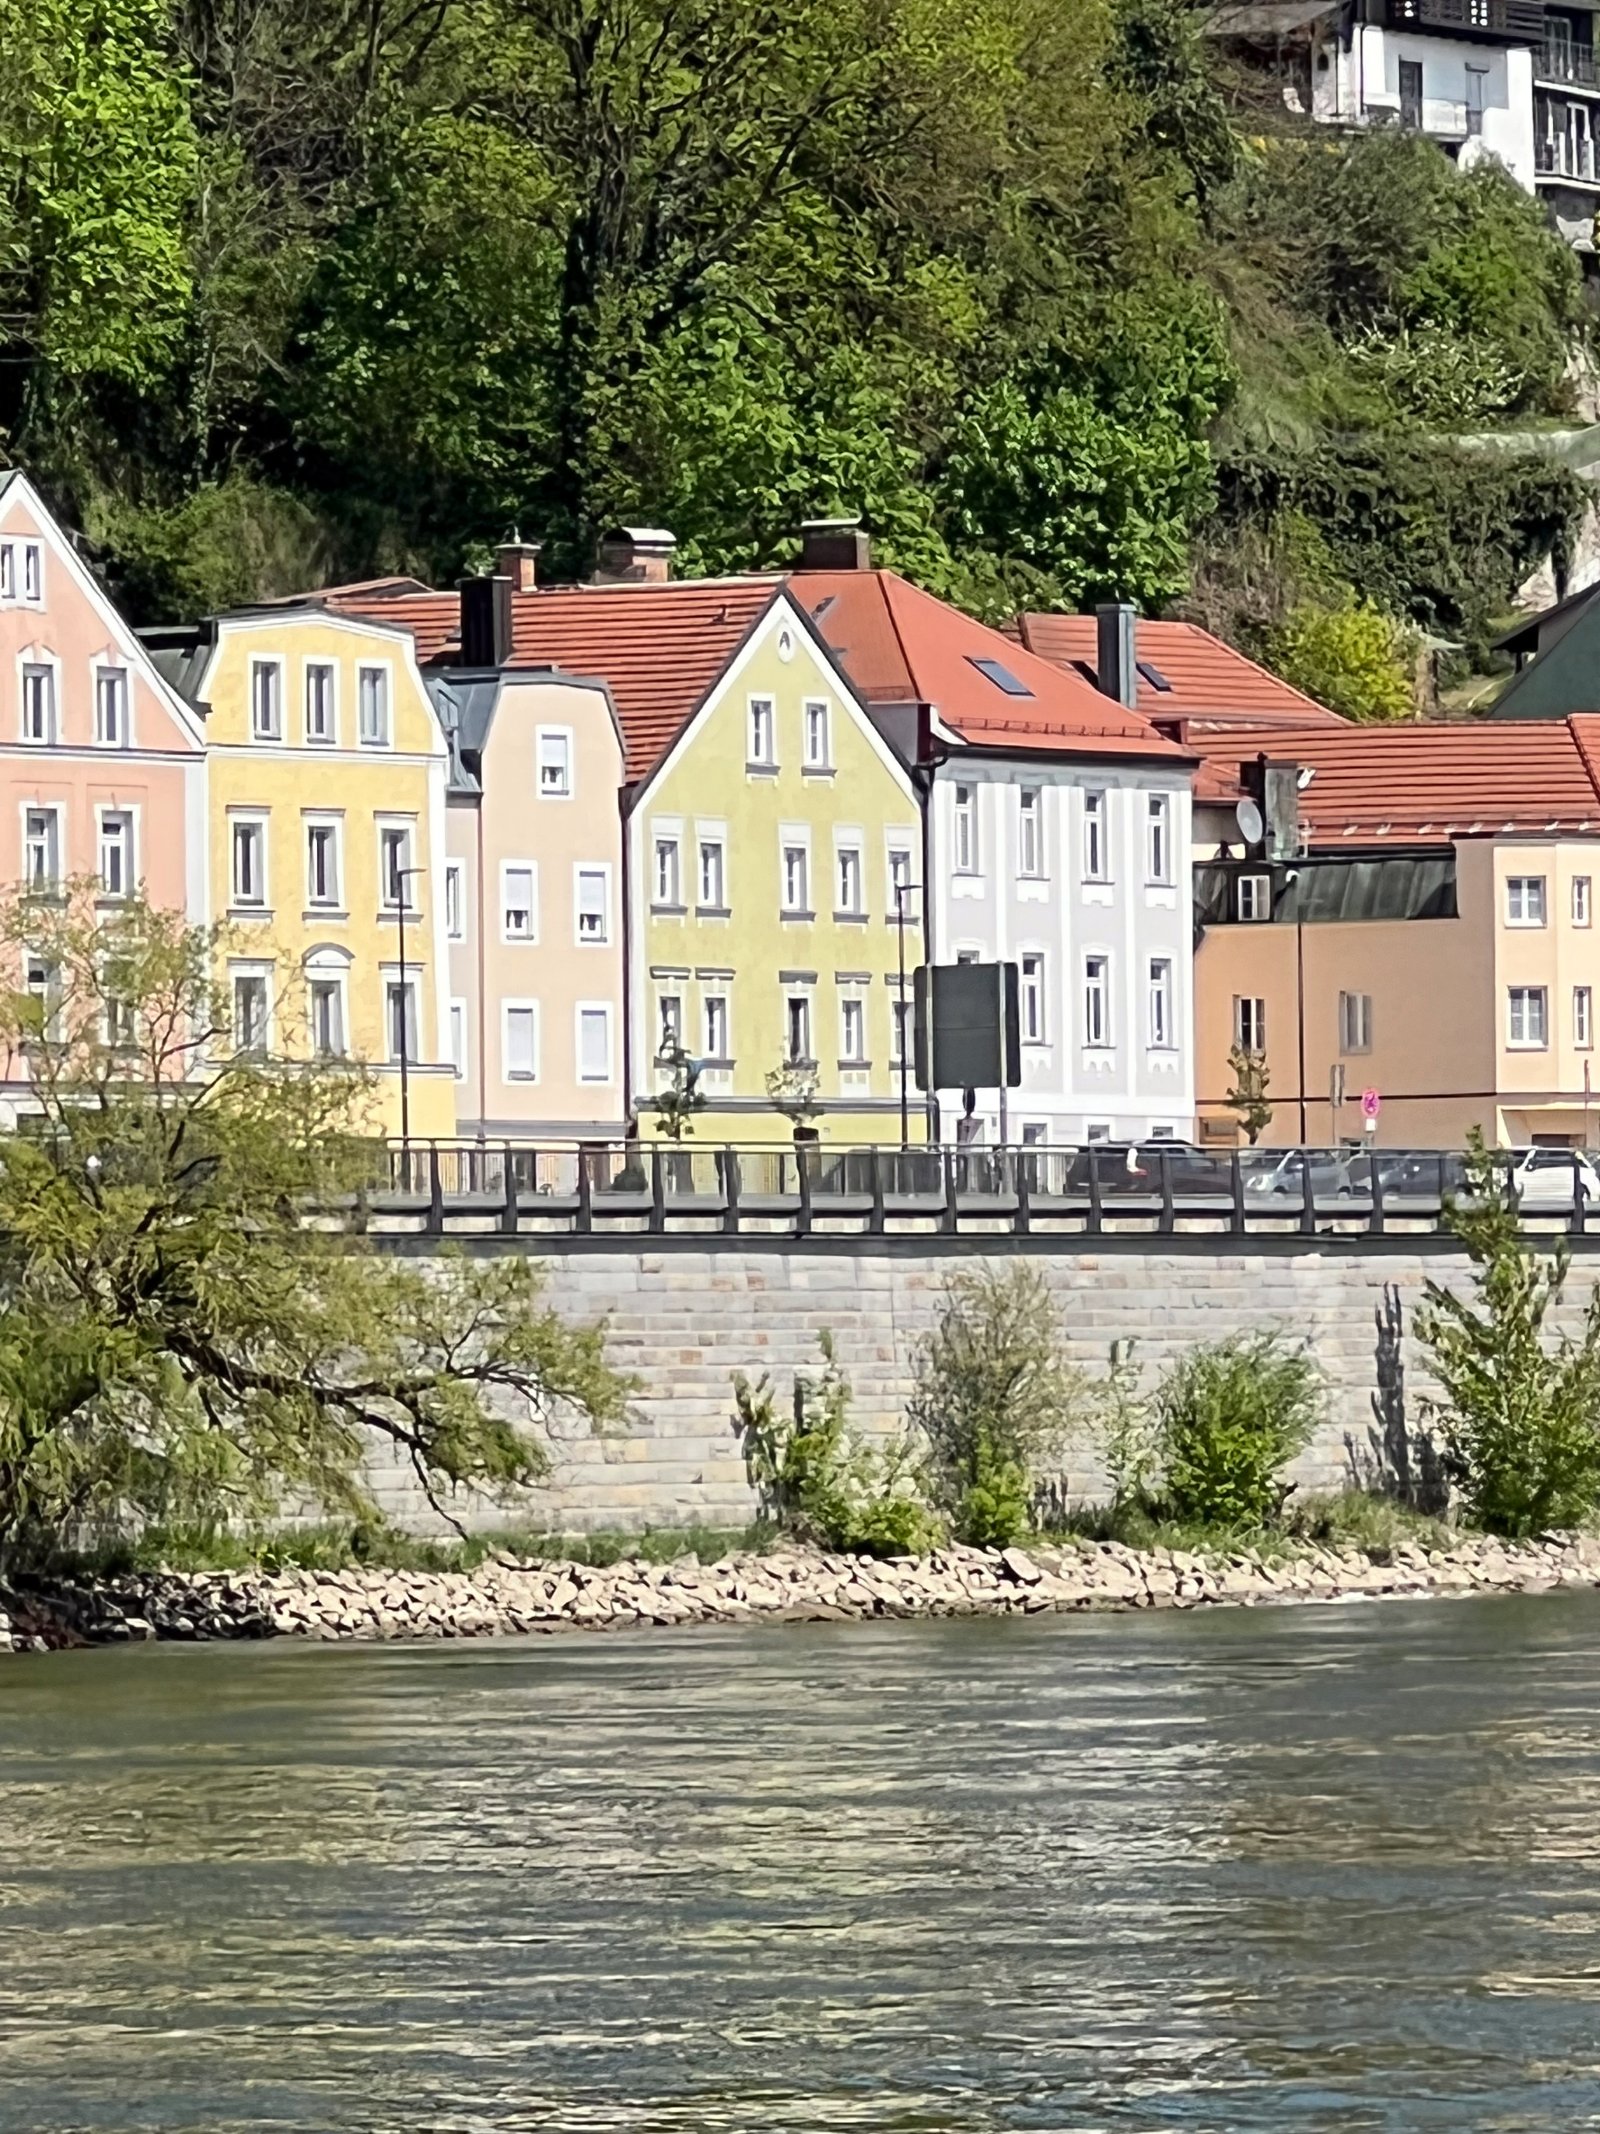 02 Donau Häuserreihe nah